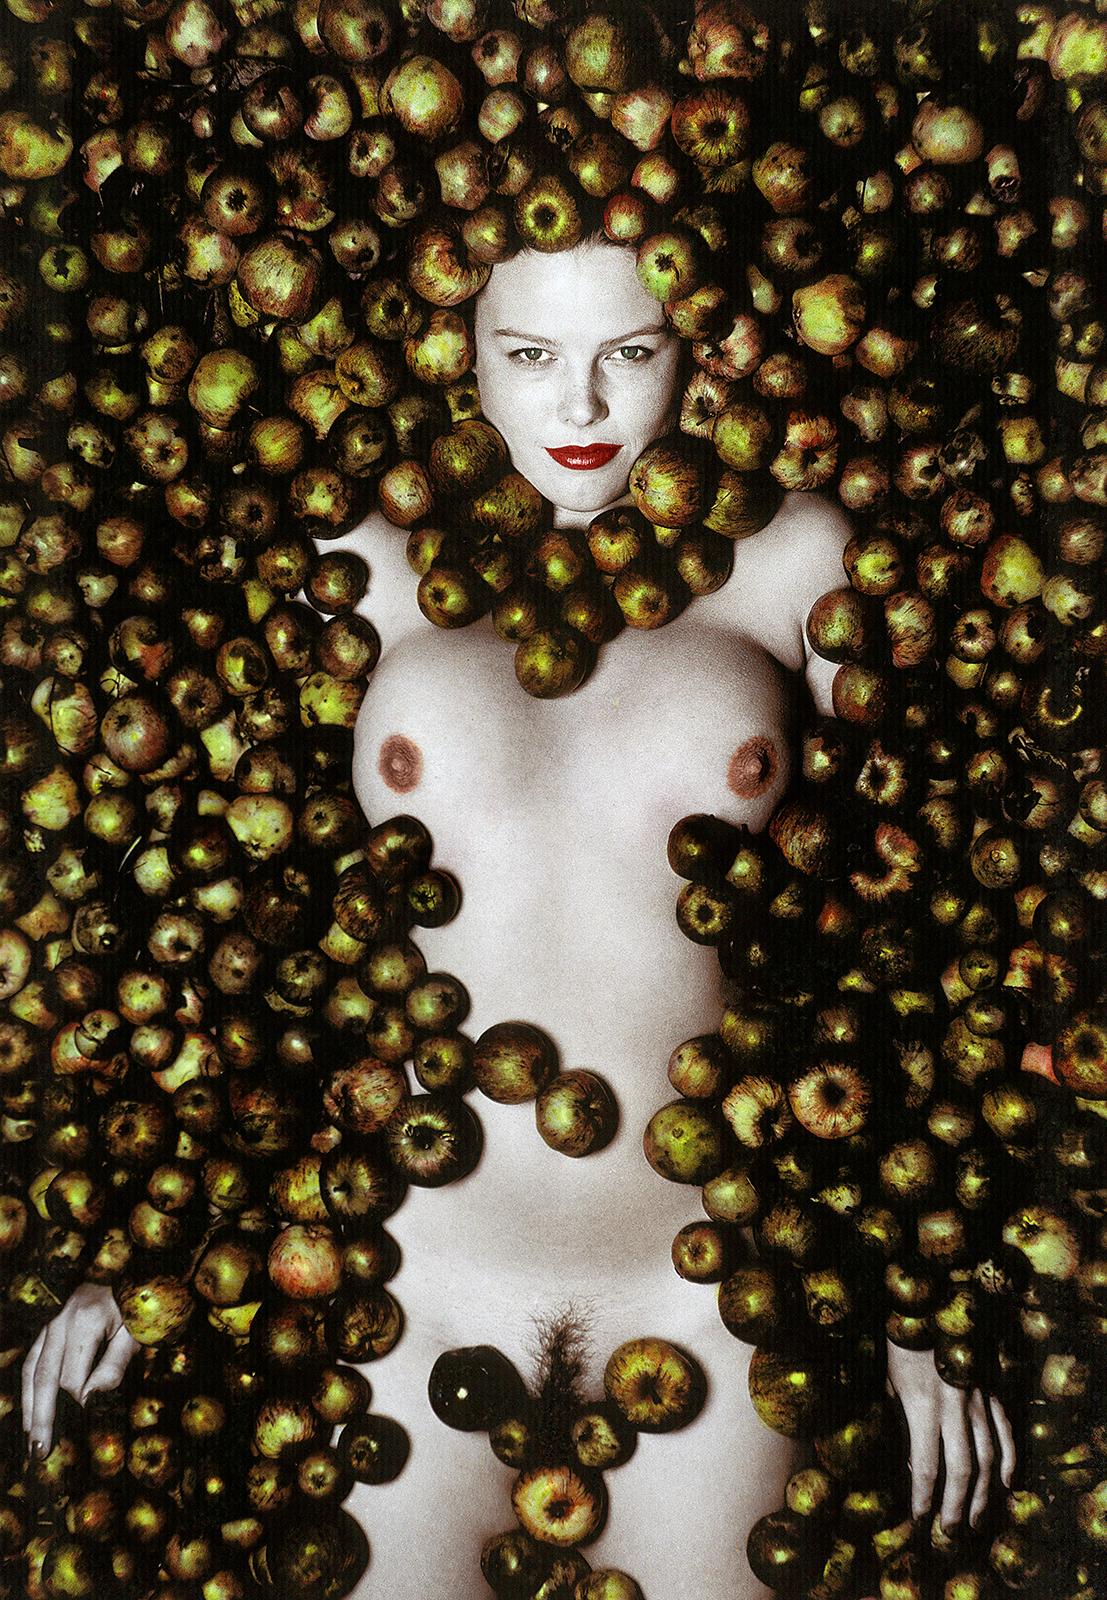 Ian Sanderson Color Photograph - Signed limited edition fine art print, Portrait like a Still-life, Apple